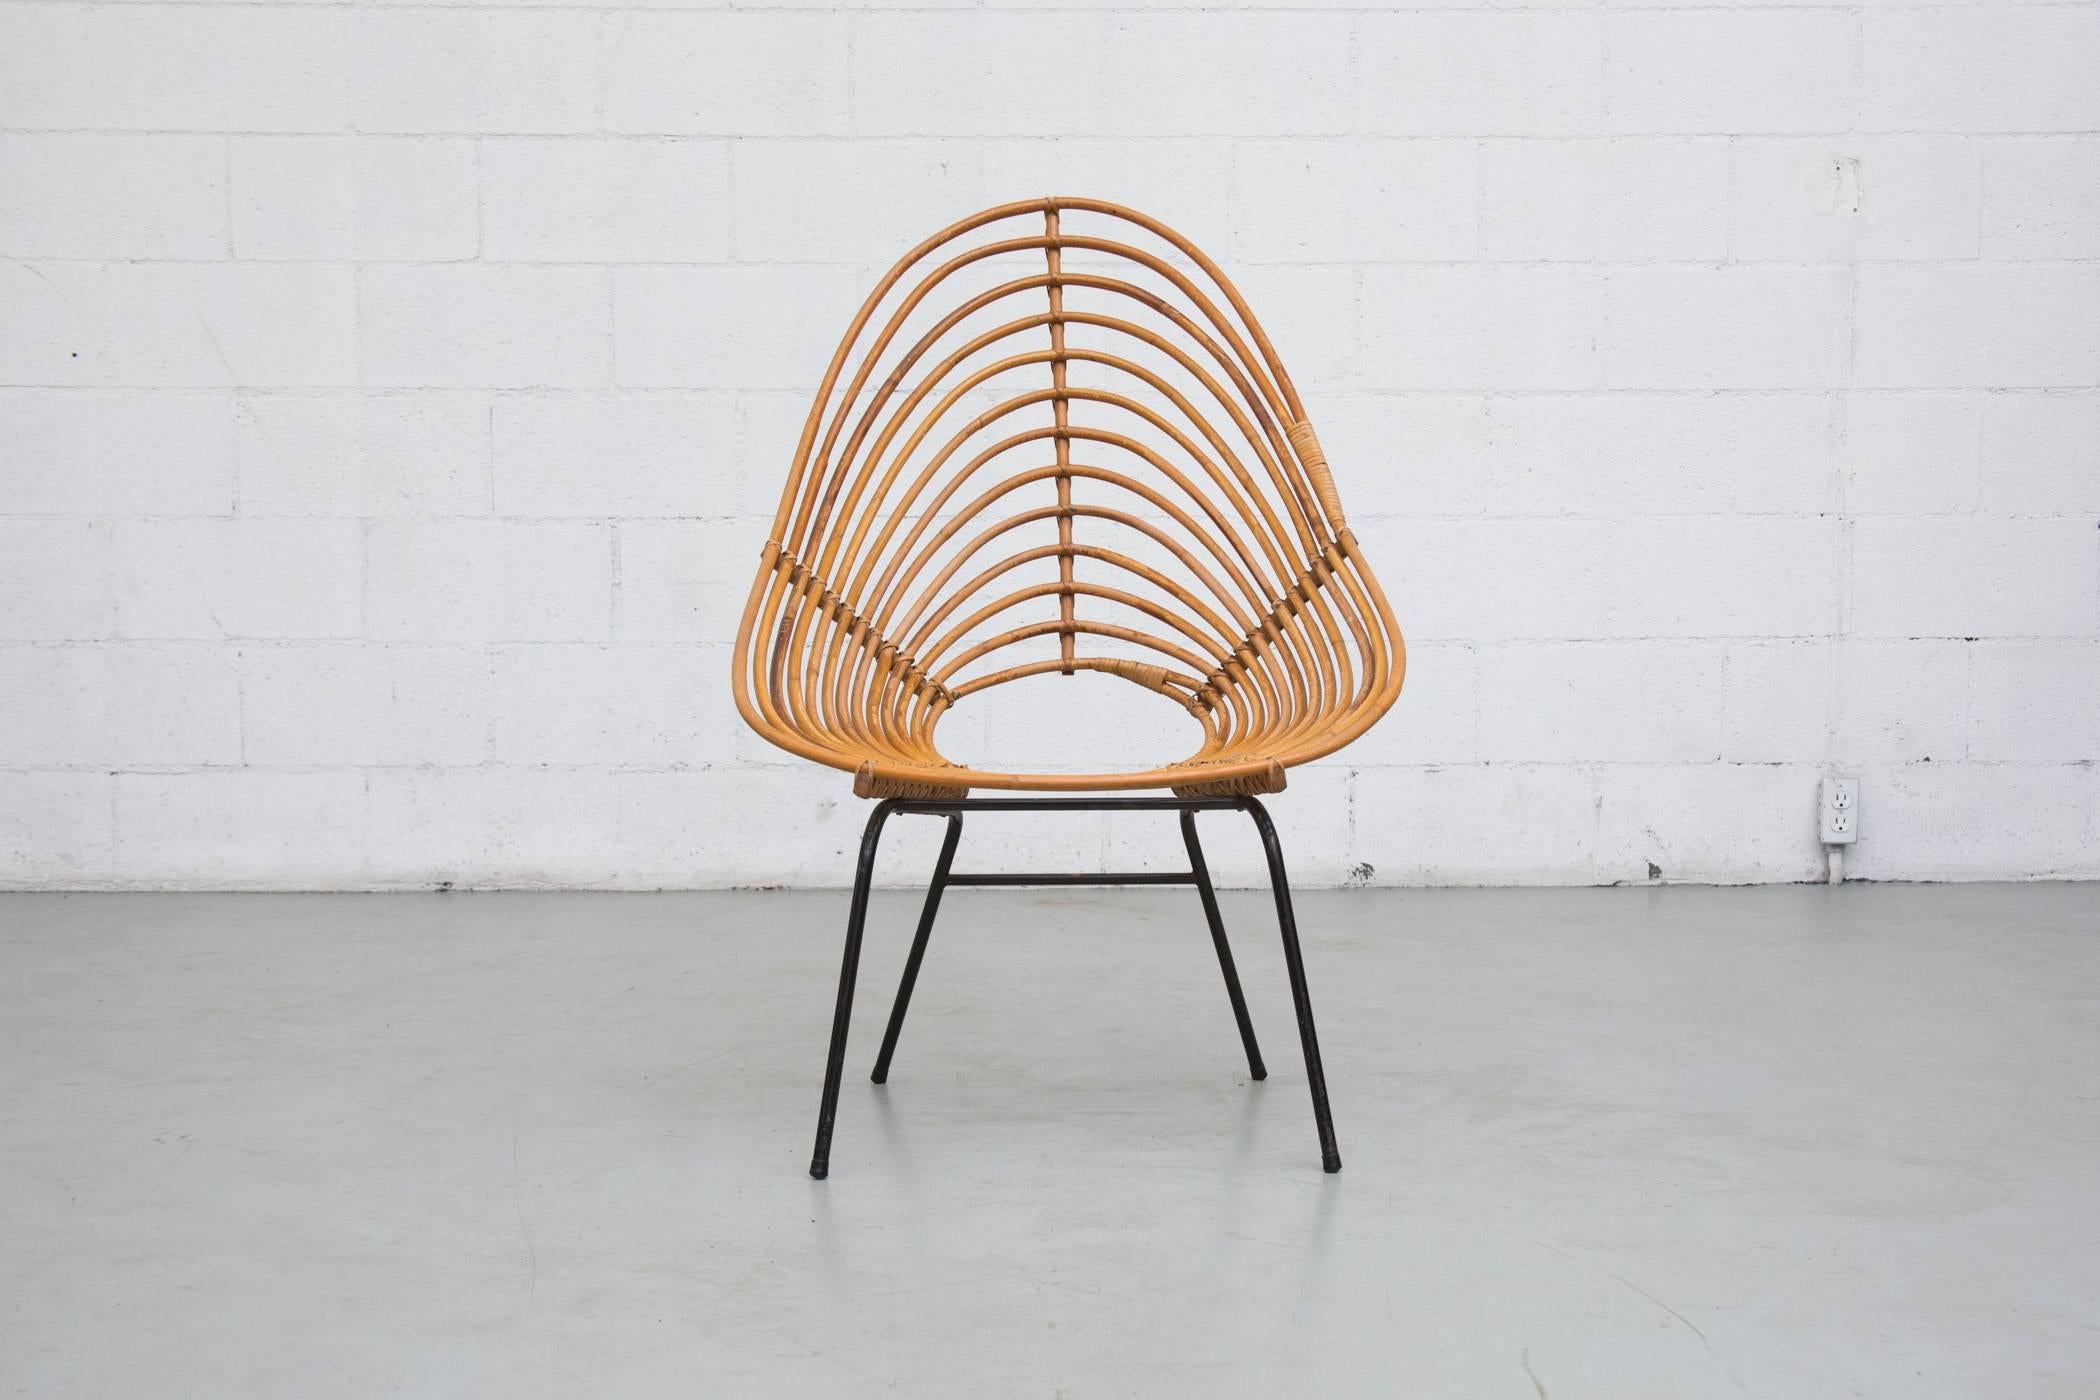 1960s Rohe Noordwolde bent bamboo hoop chair by H. Broekhuizen for Rohe Noordwolde. Beautiful patina, original condition. Visible wear.